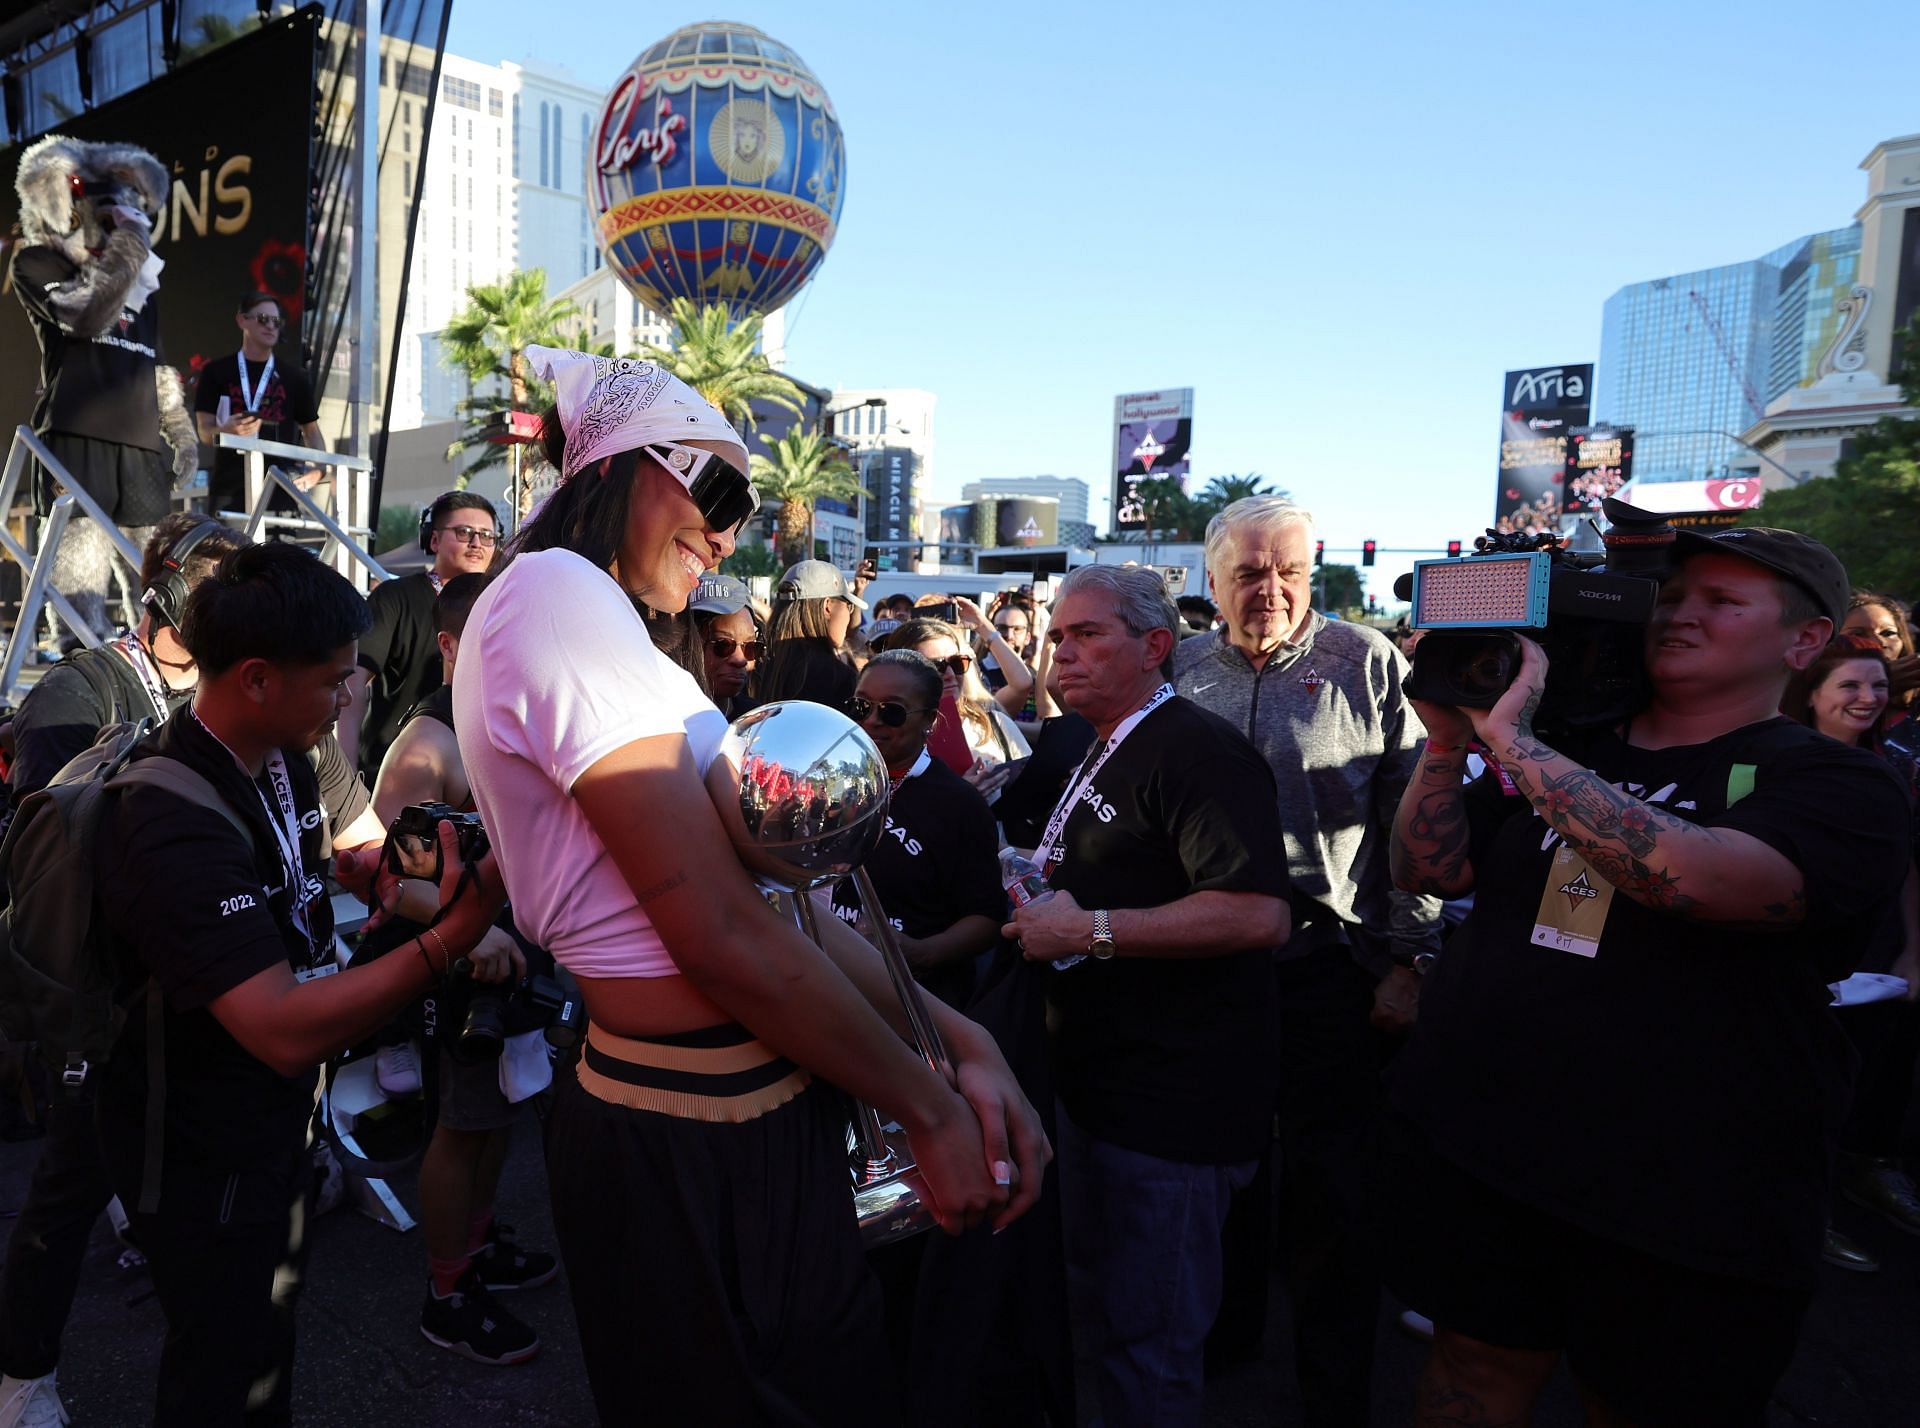 Las Vegas Aces Victory Parade &amp; Rally